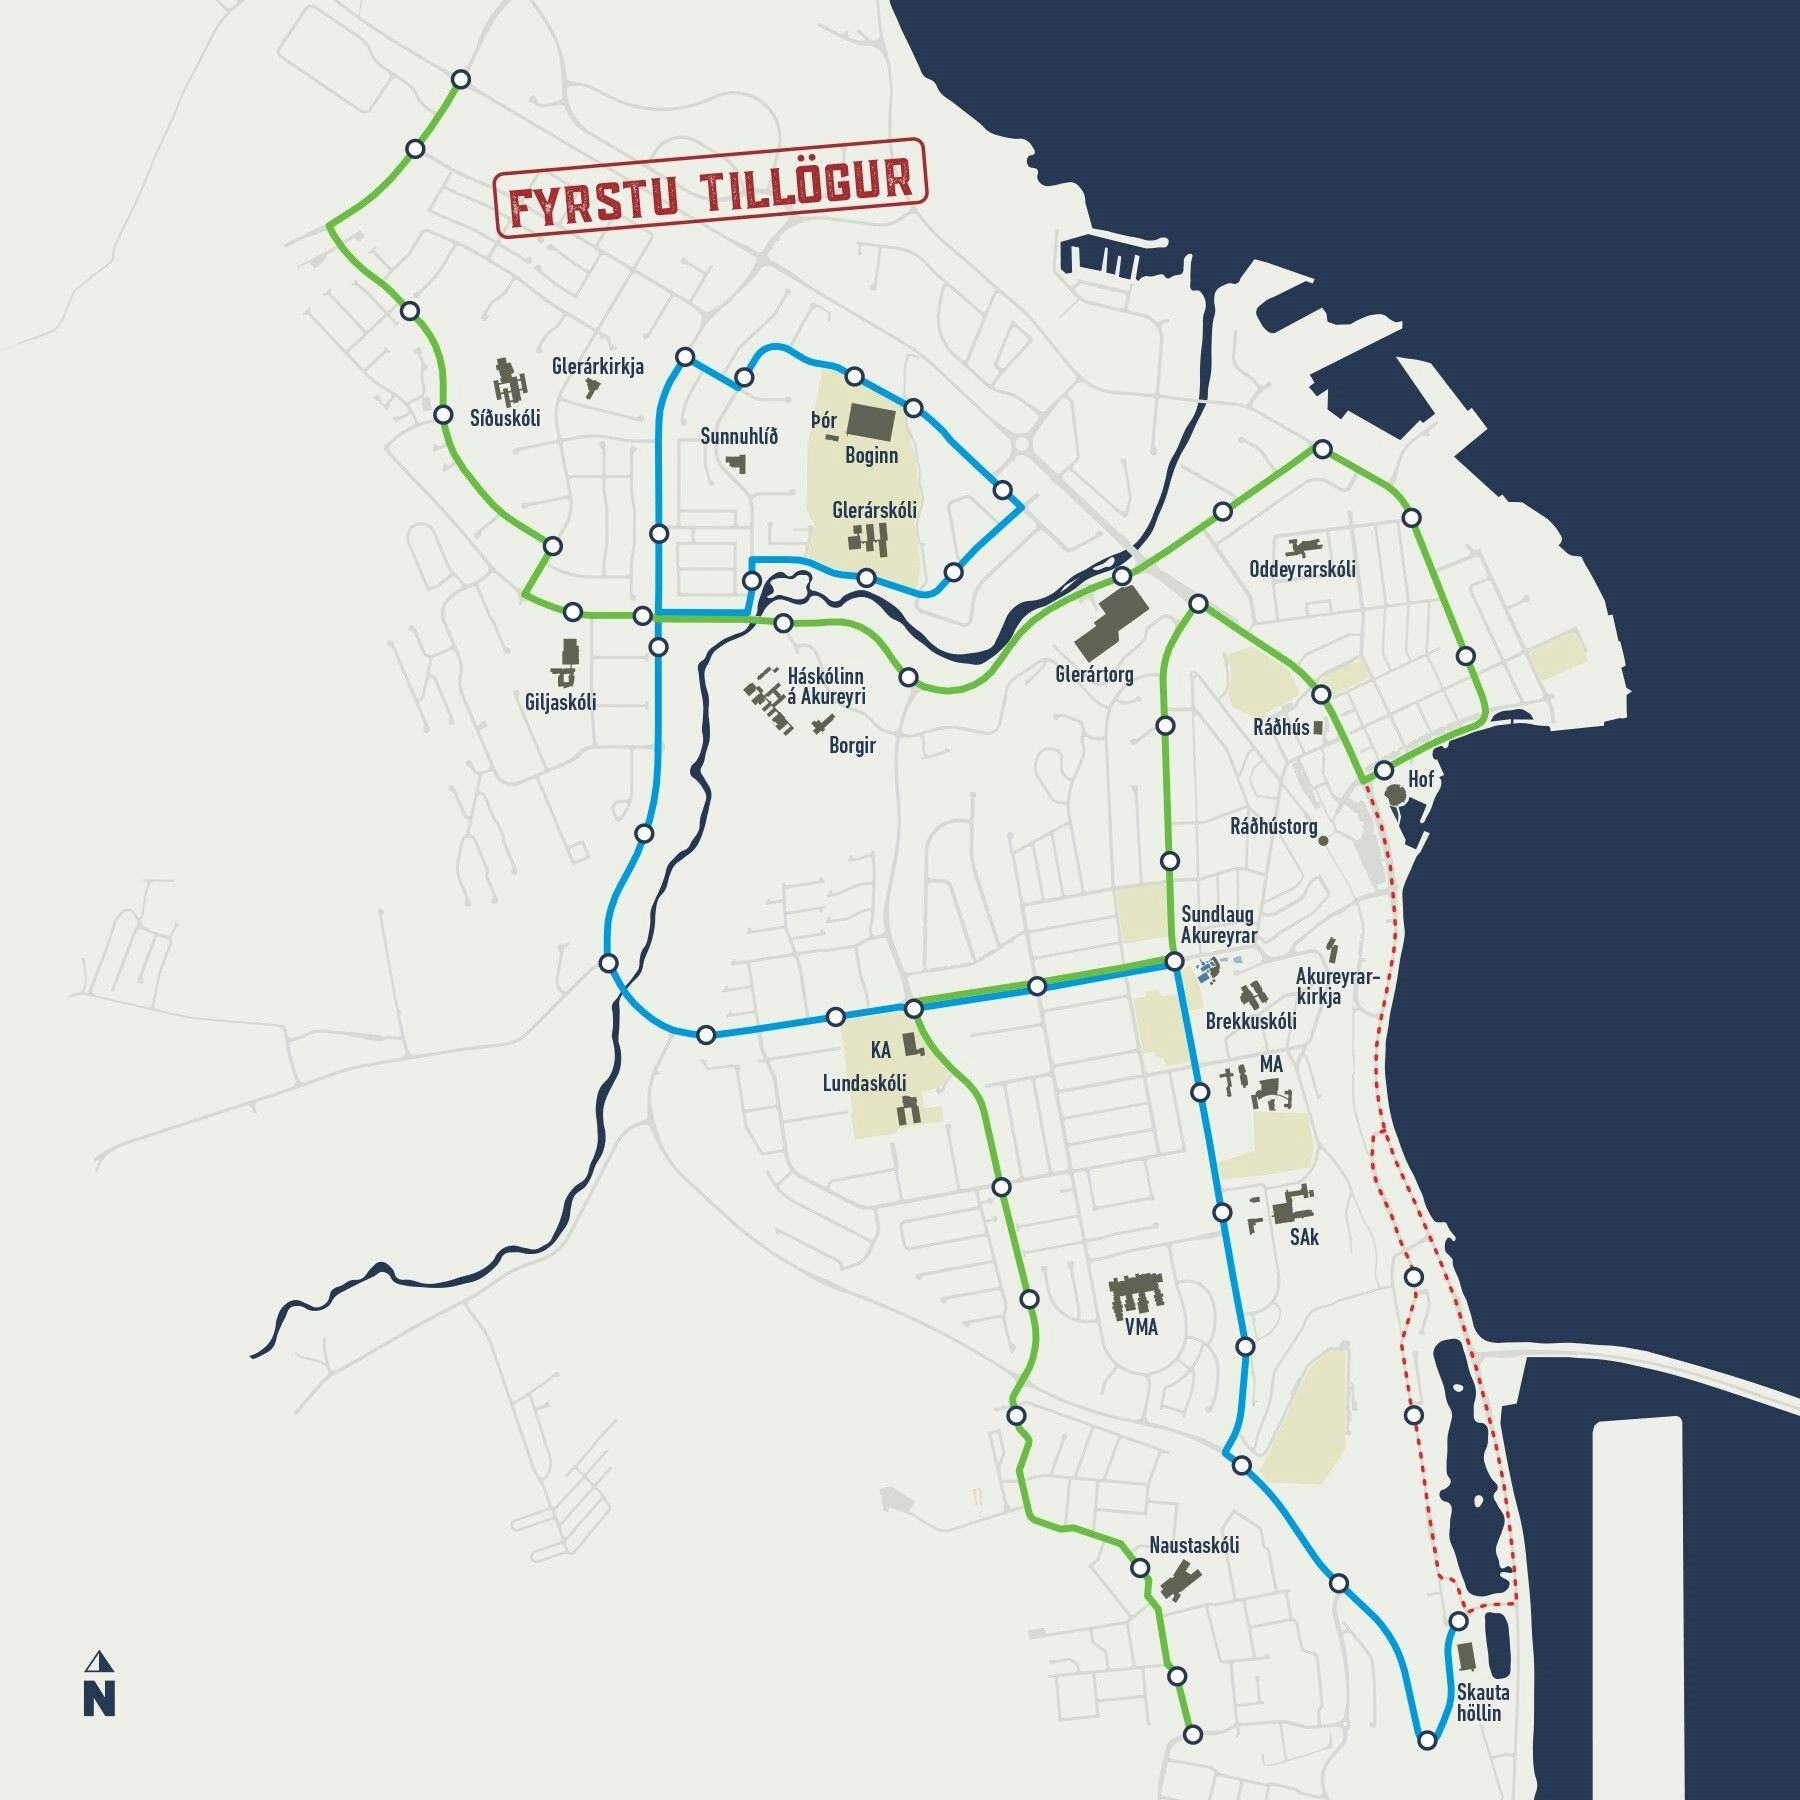 A map of public transportation network